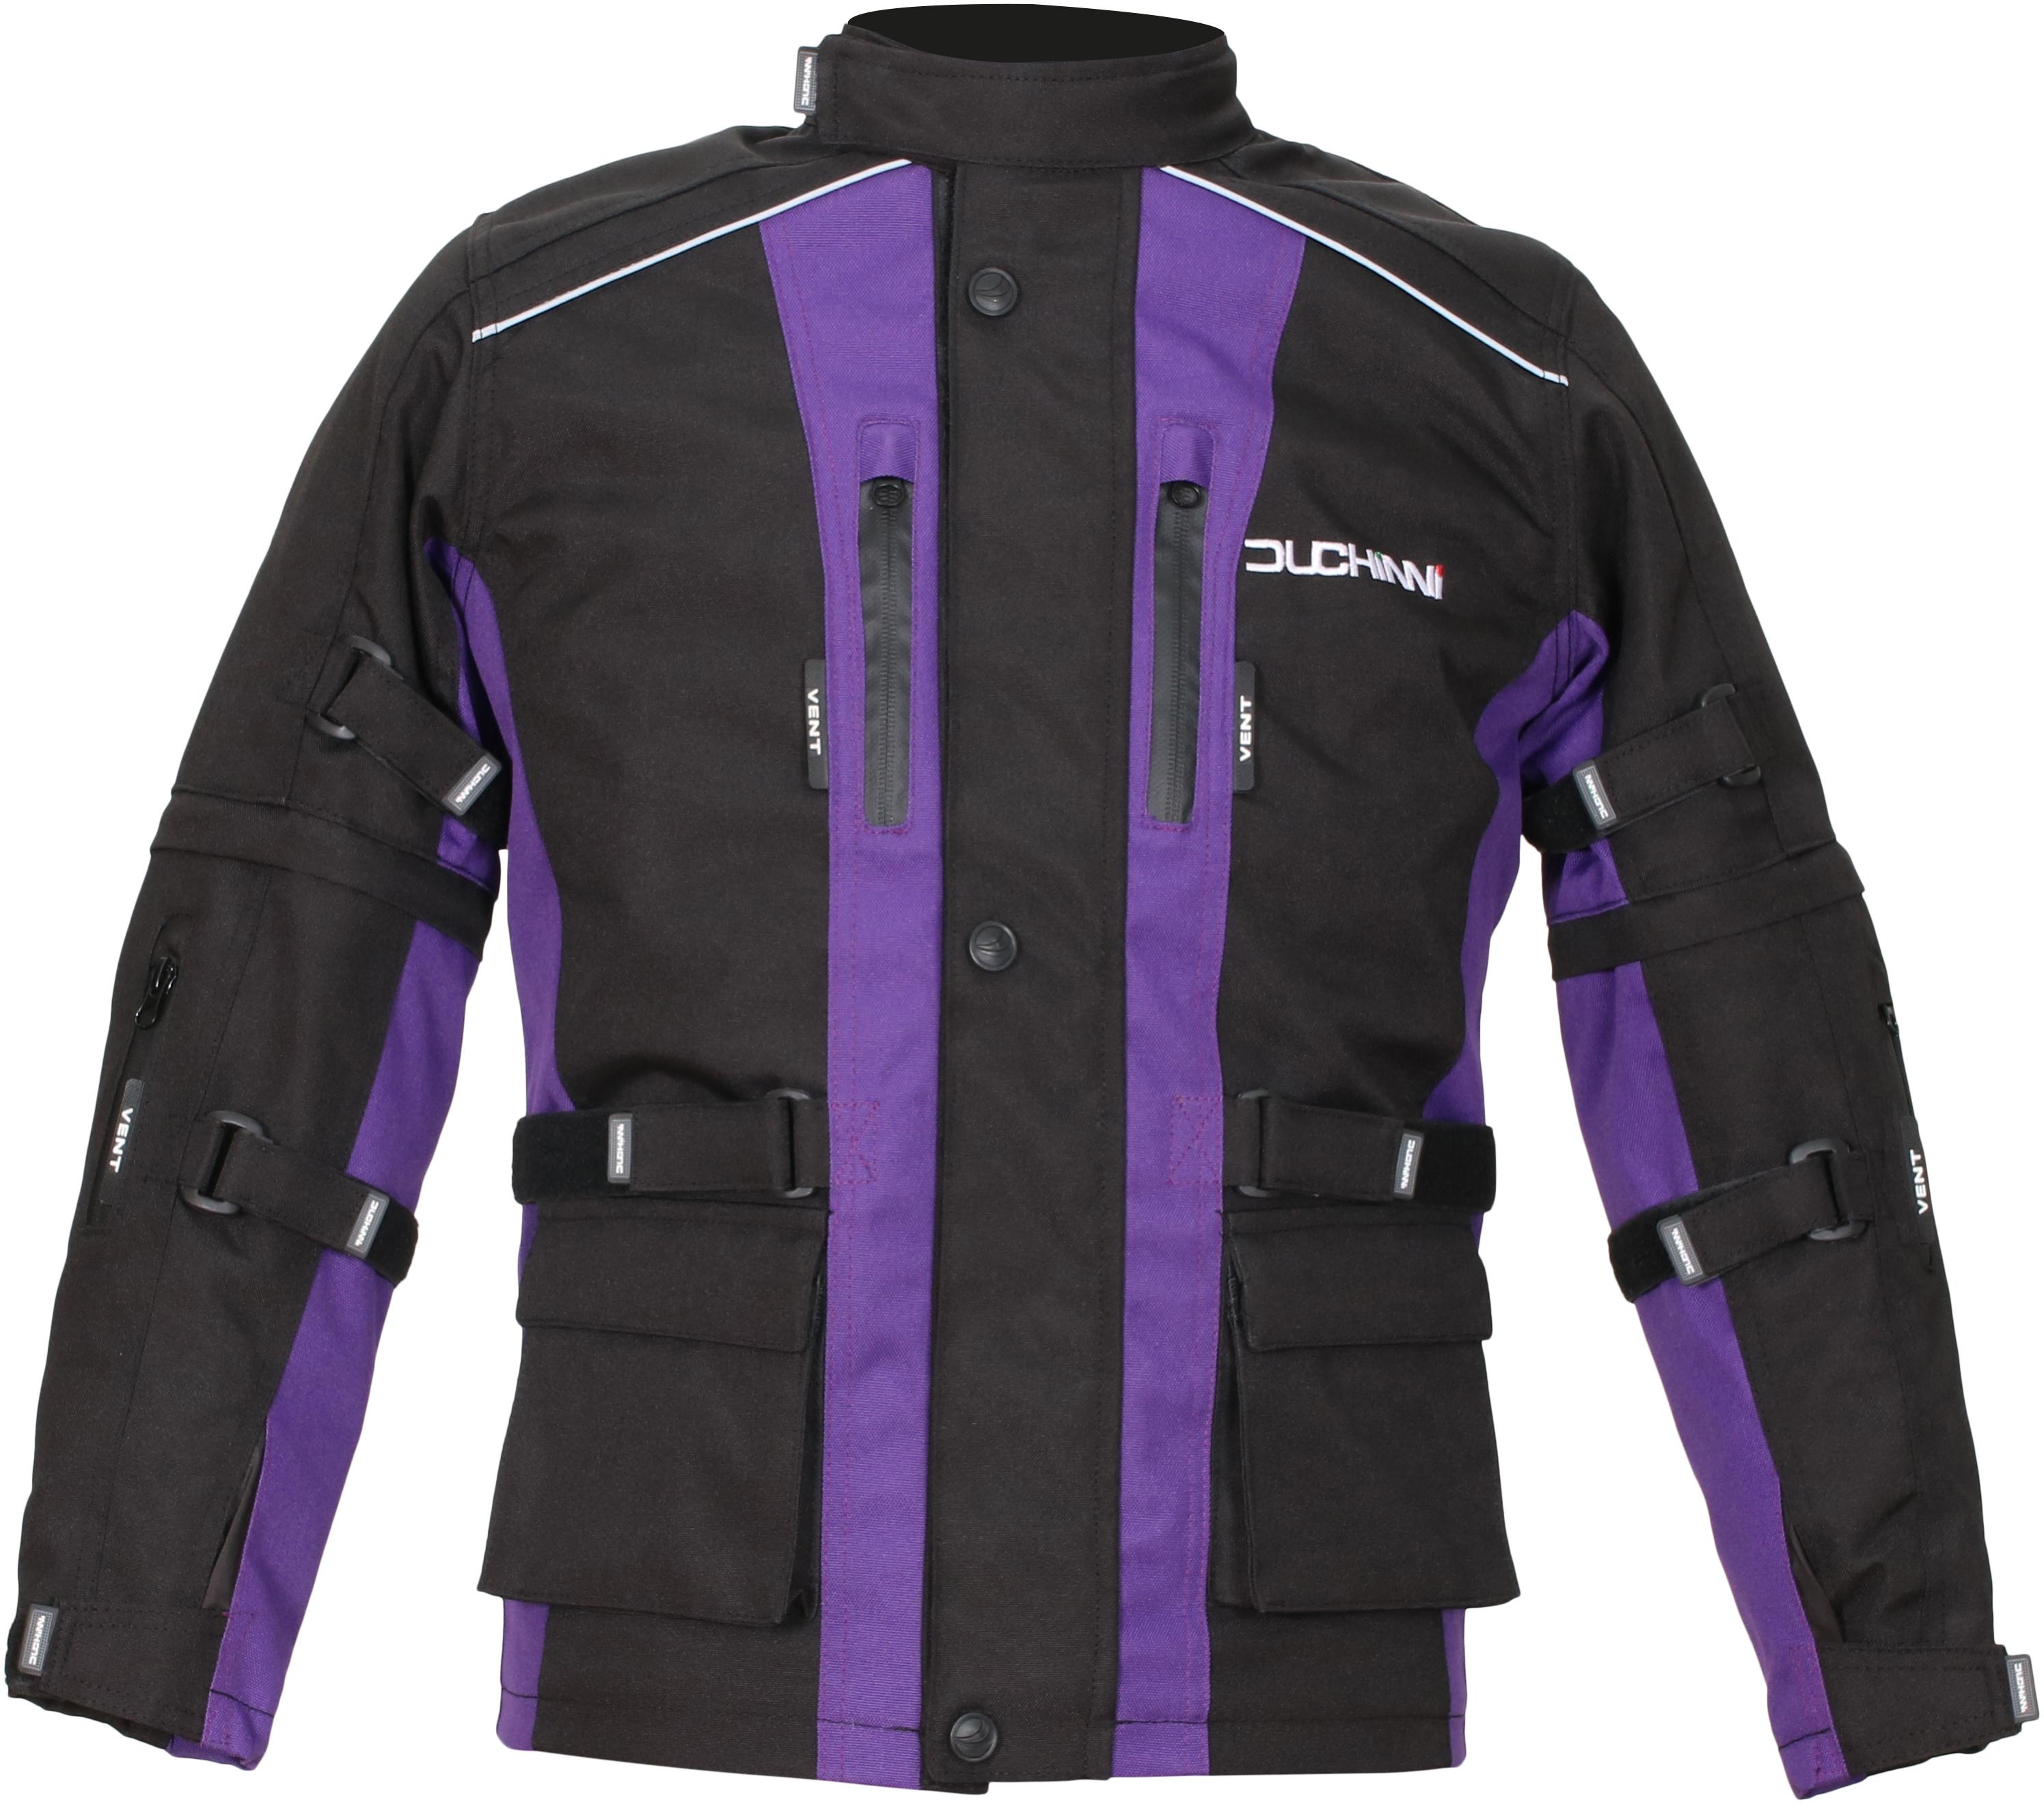 Duchinni Jago Youth Motorcycle Jacket - Black And Purple, L